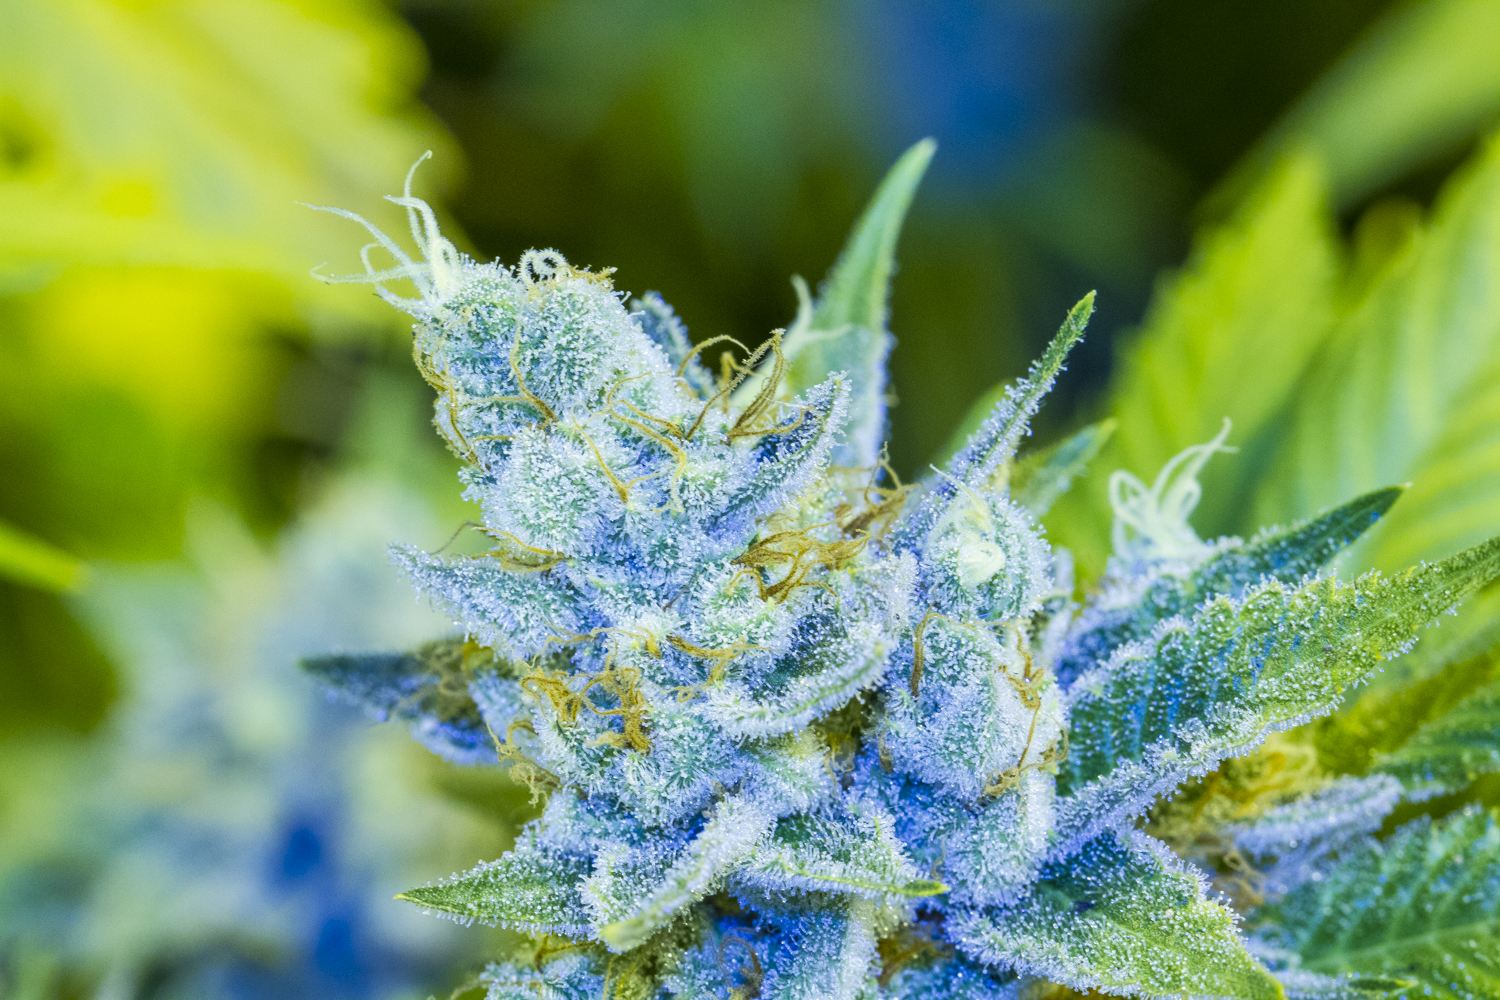 hybrid cannabis strain growing